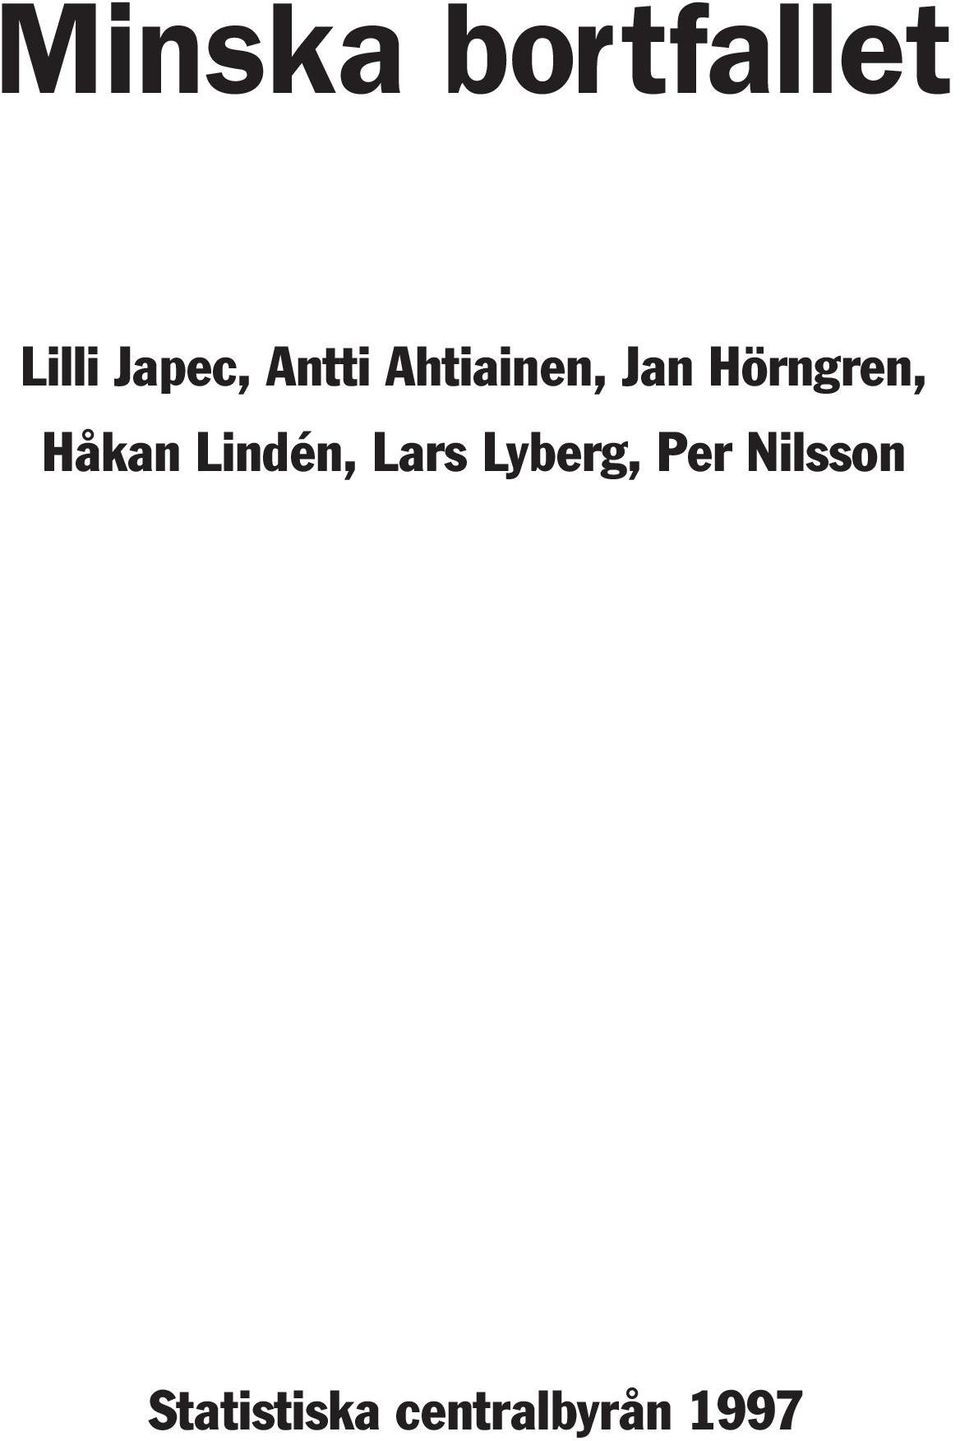 Håkan Lindén, Lars Lyberg, Per